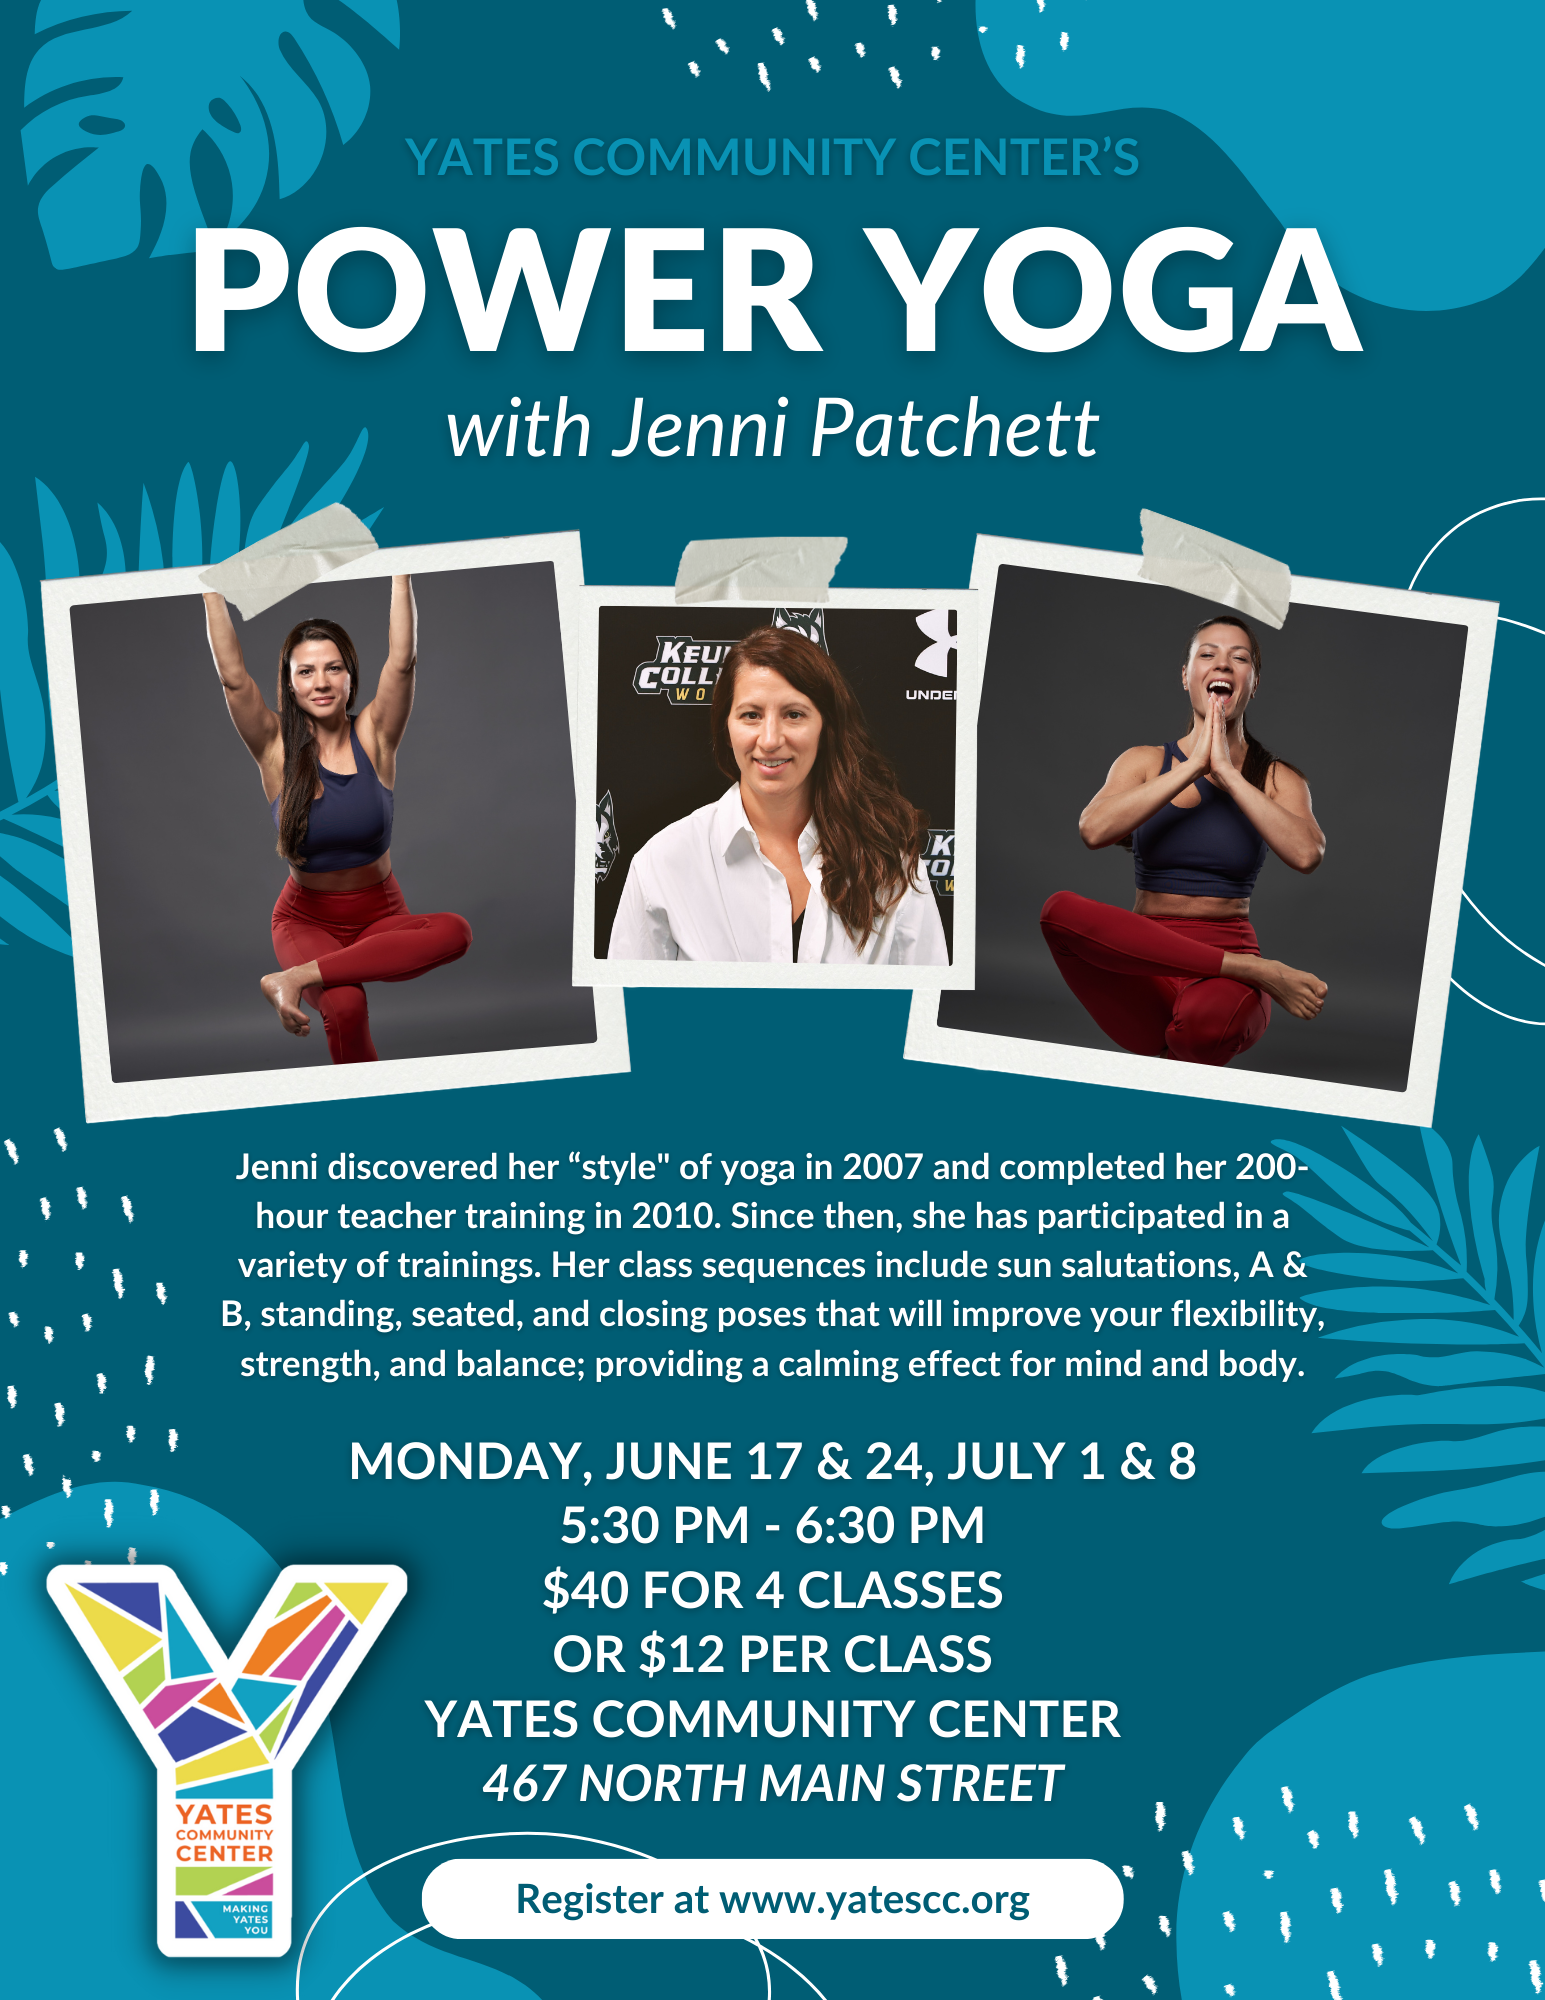 Power Yoga with Jenni at the Yates Community Center